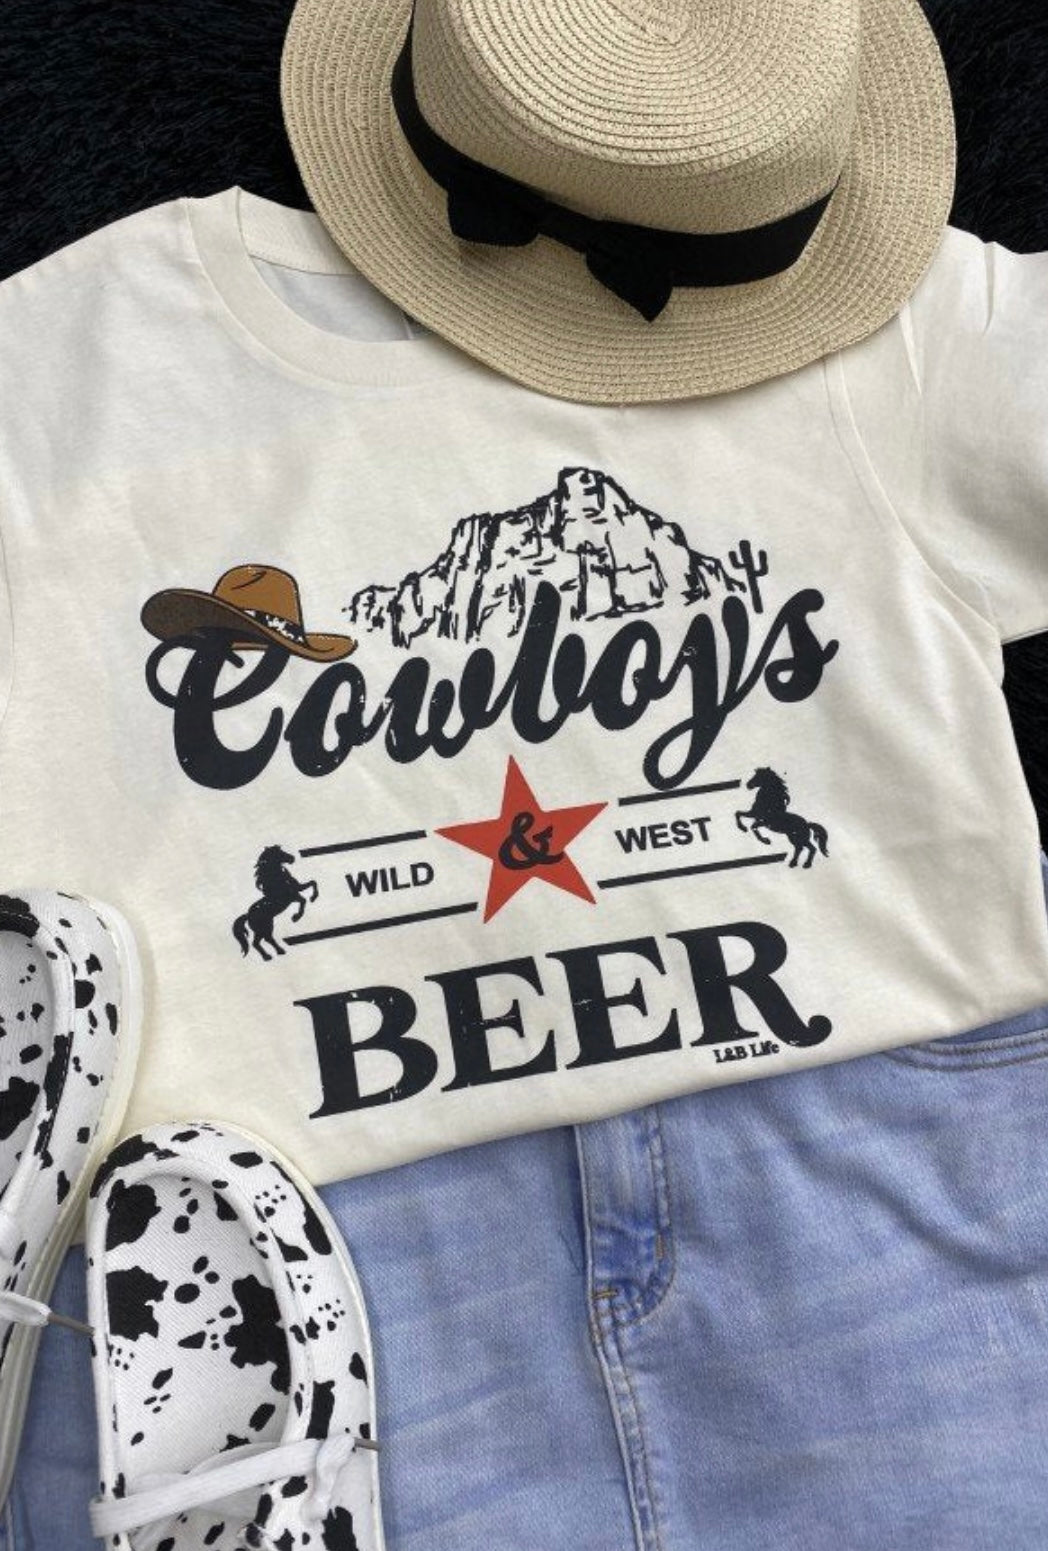 Cowboys and beer tee